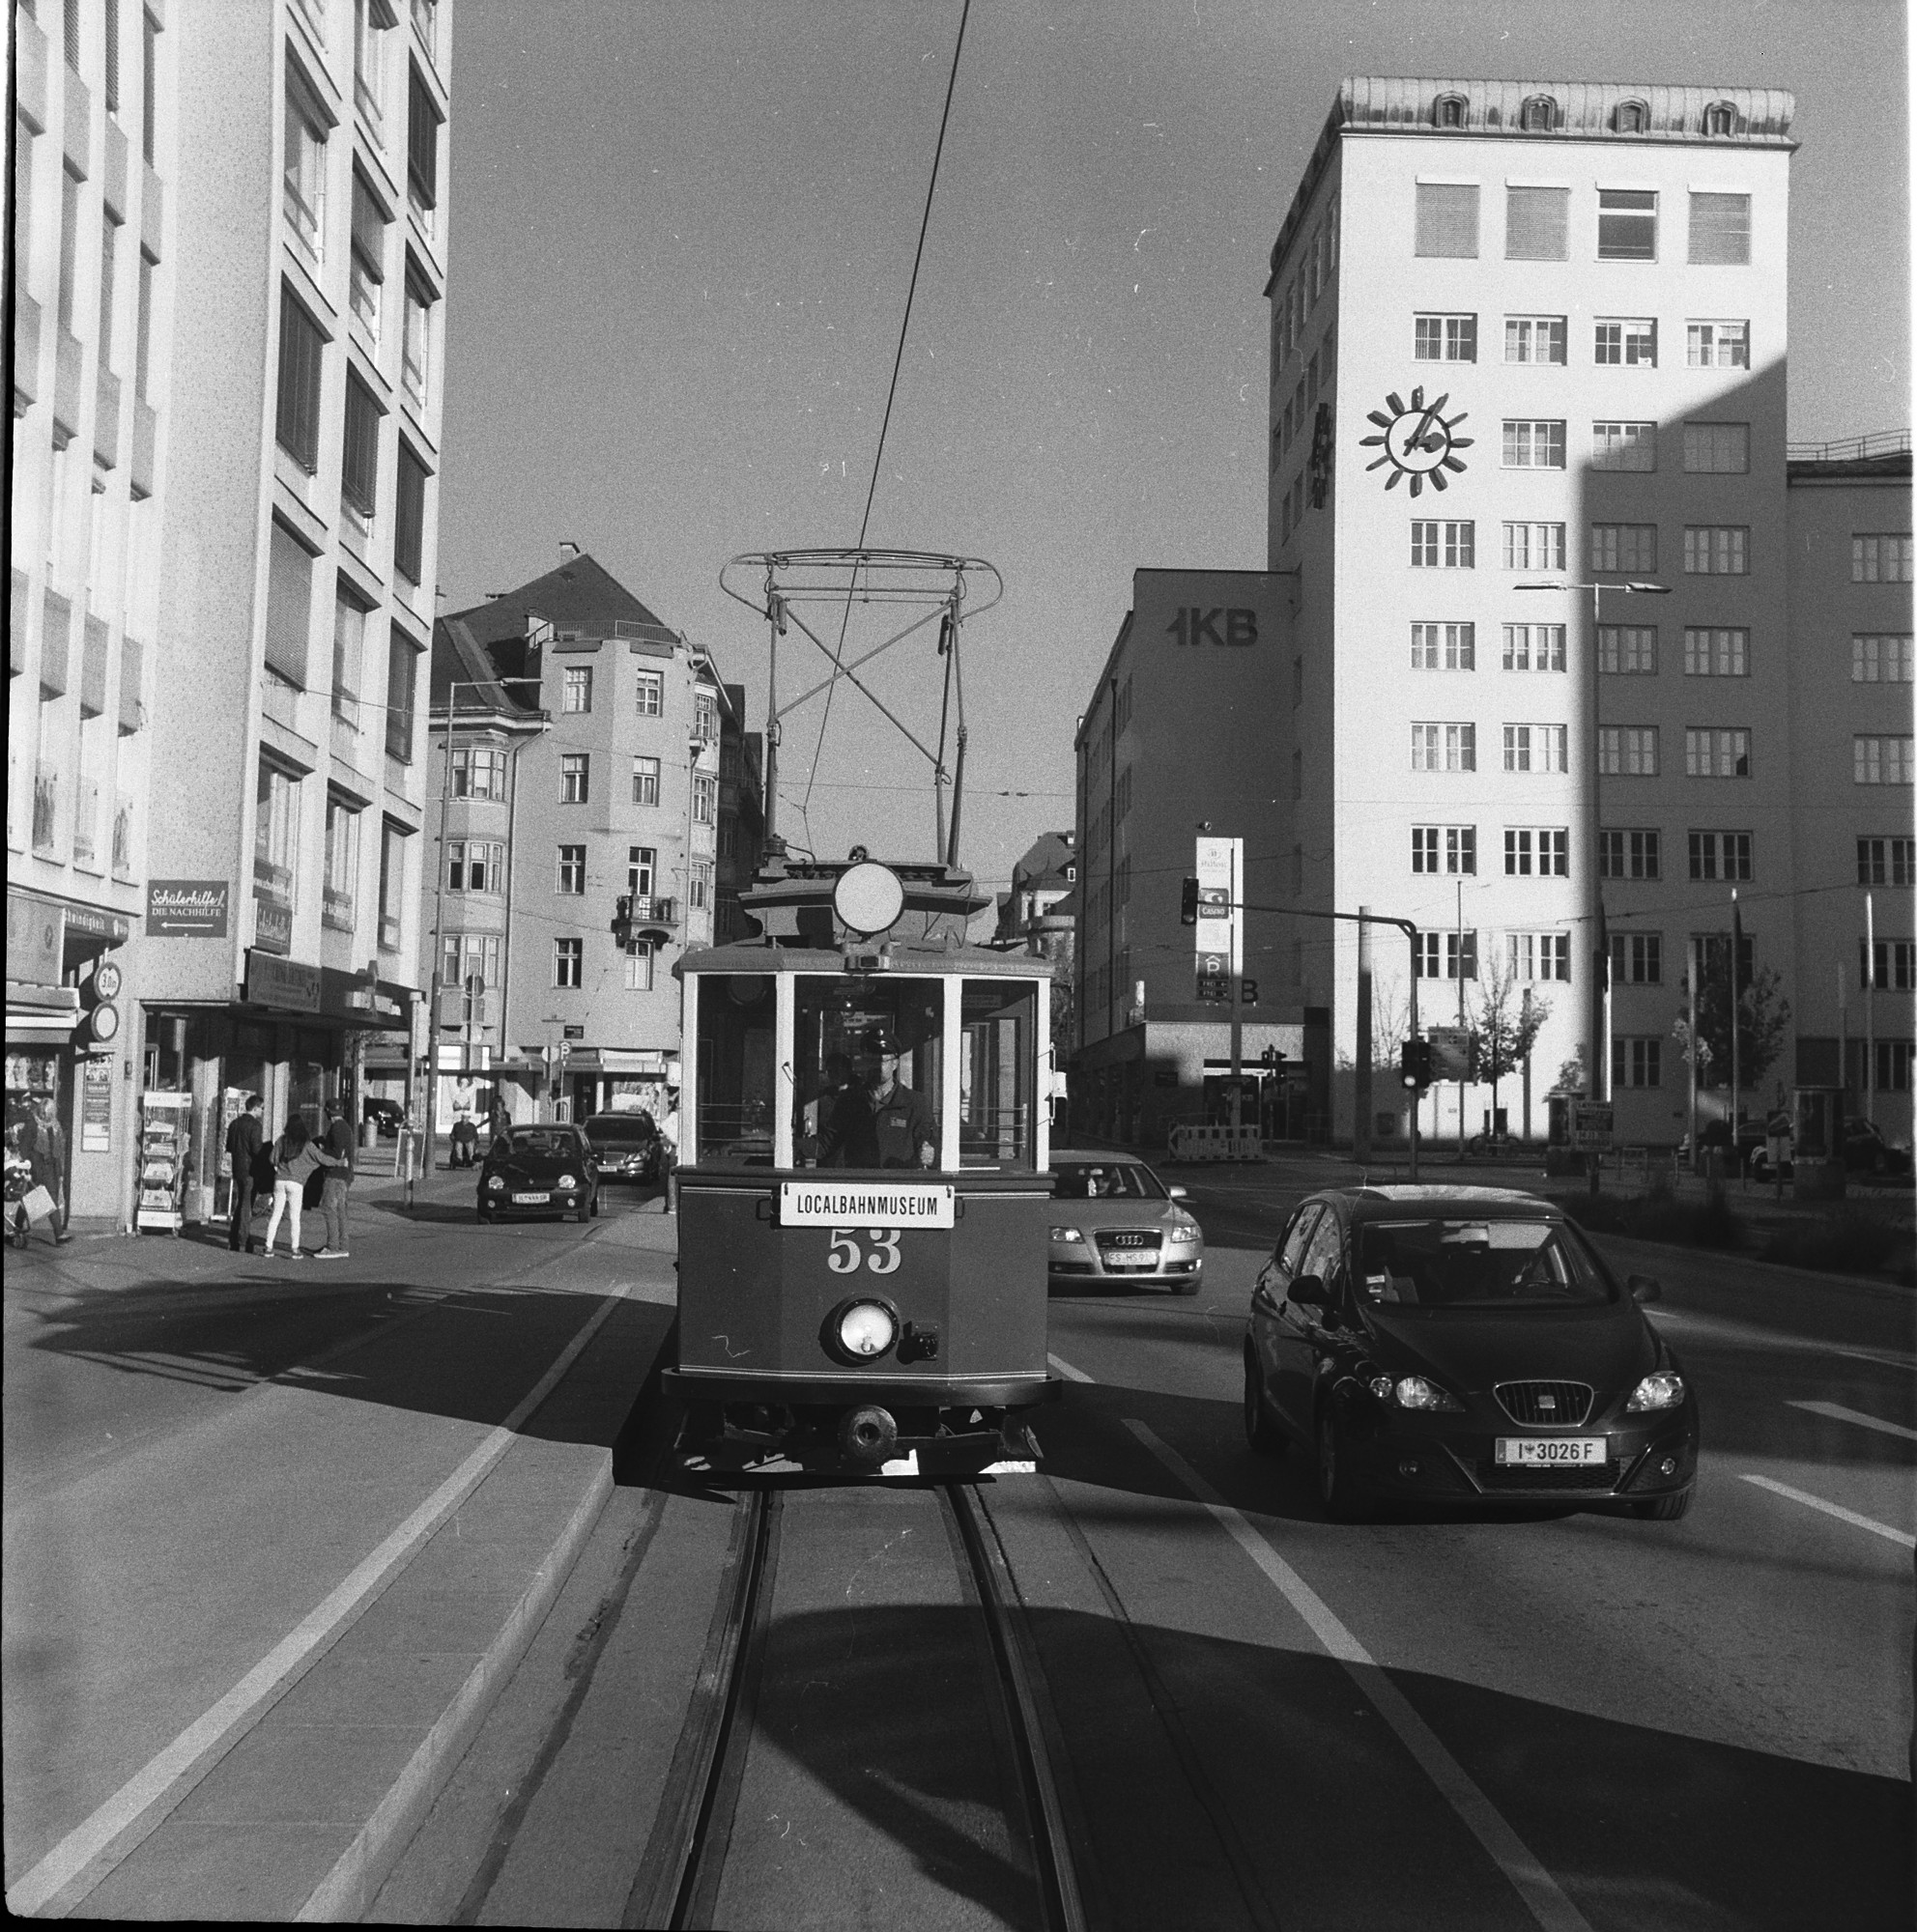 Old tramway in Innsbruck (22535108157)